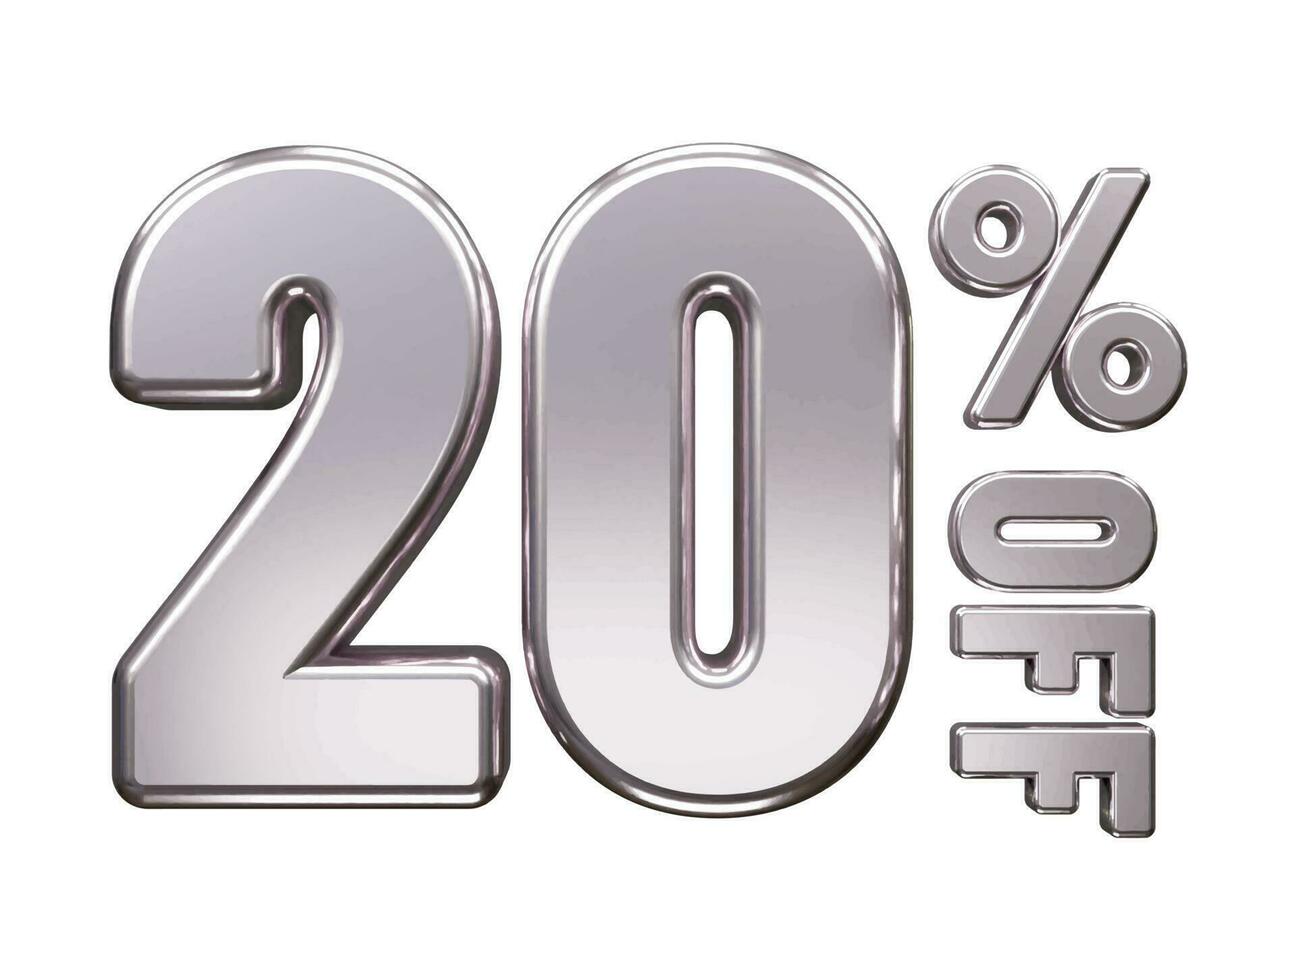 Percent off discount sale vector 3d rendering